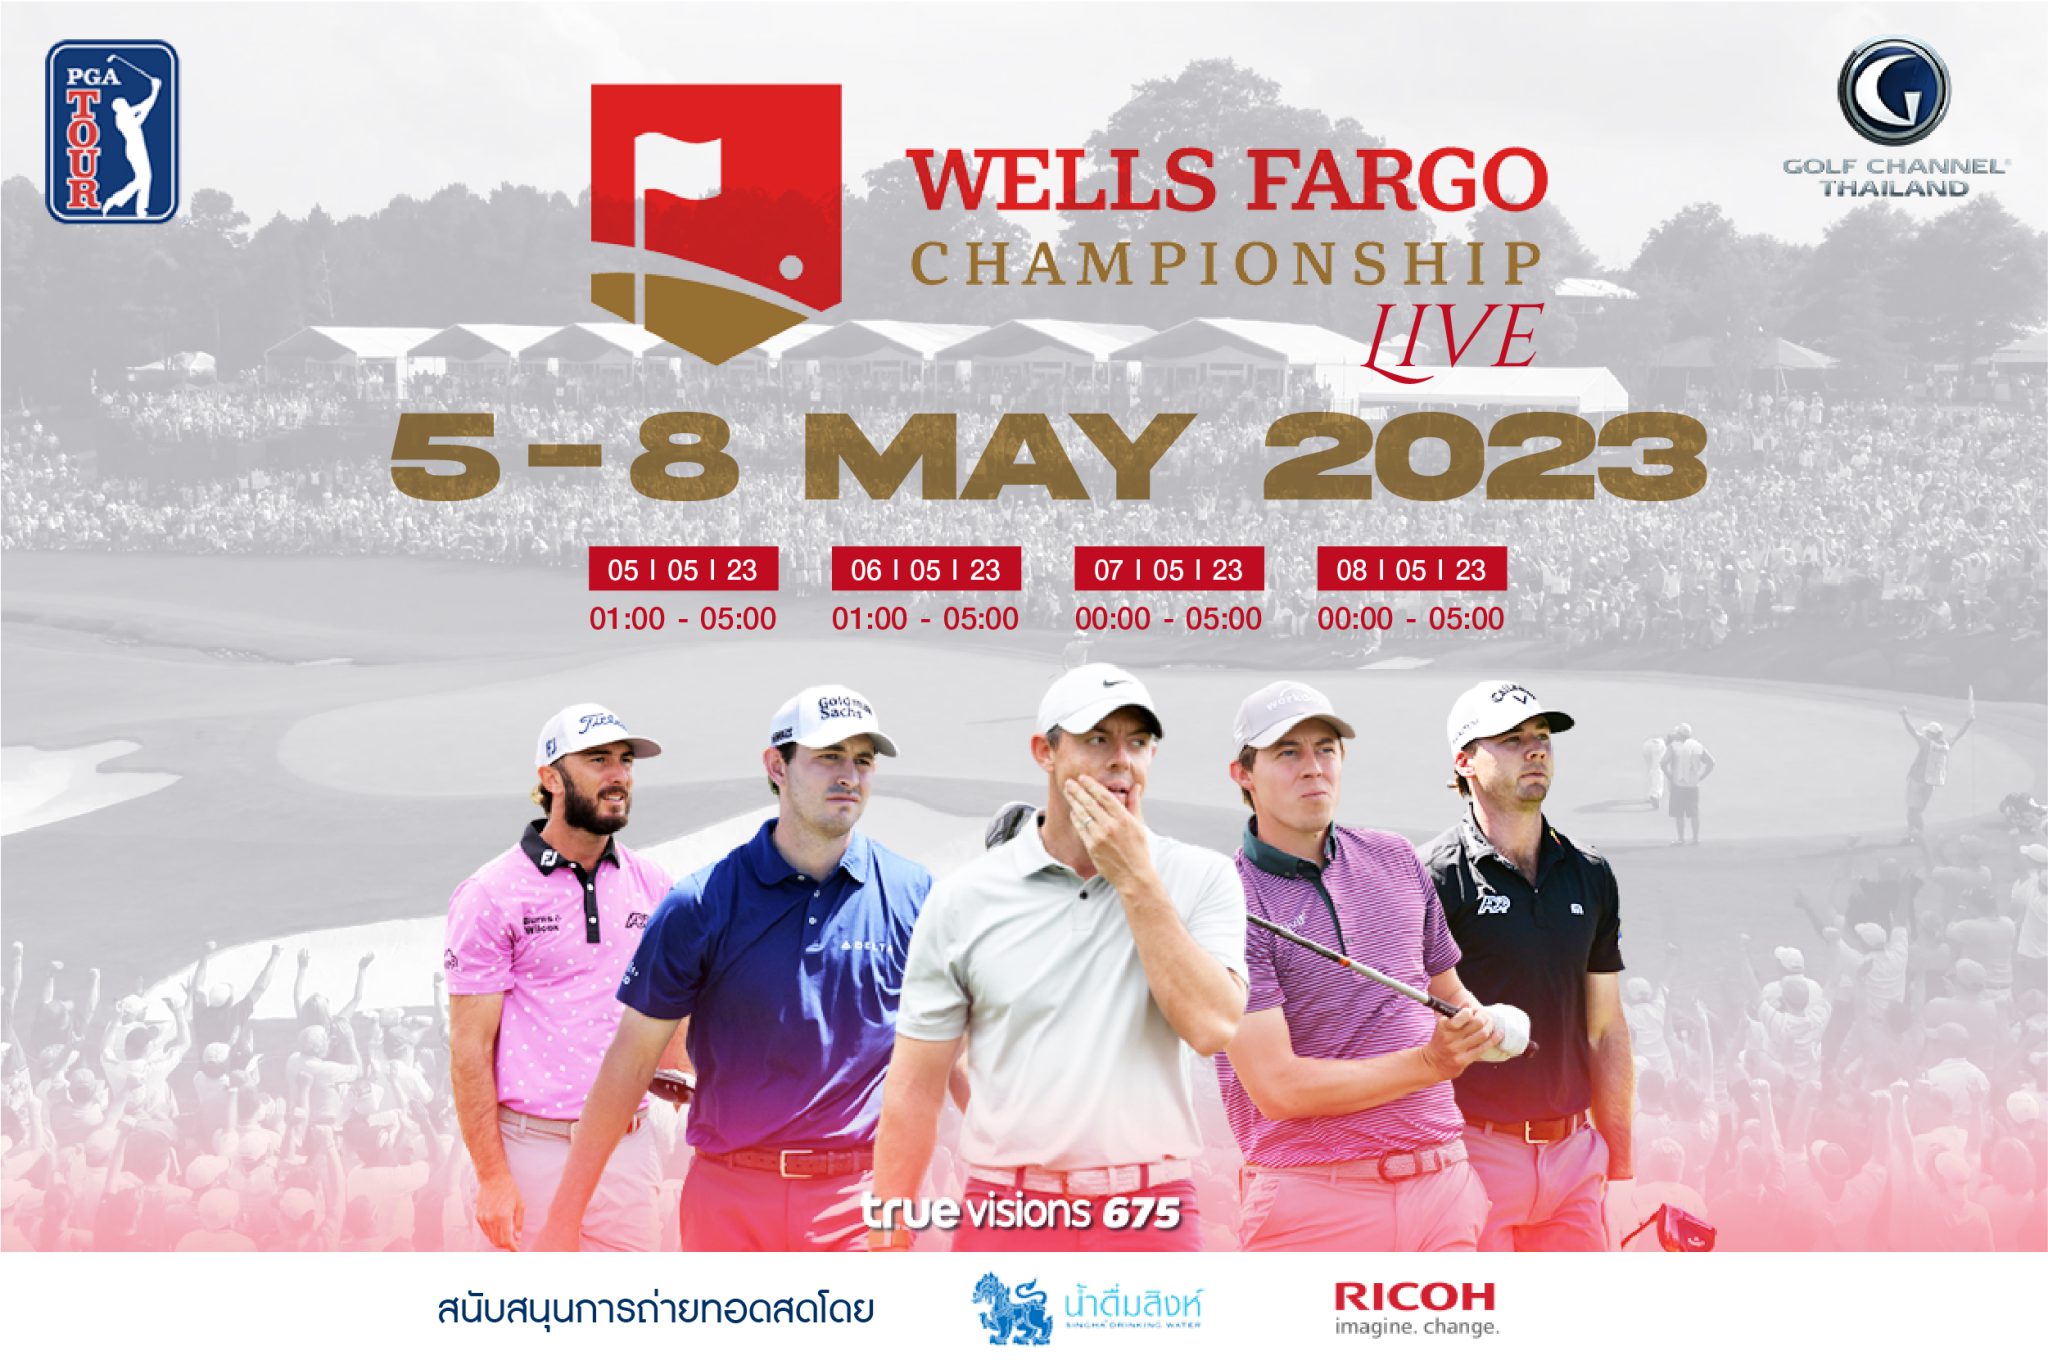 pga tour wells fargo championship 2023